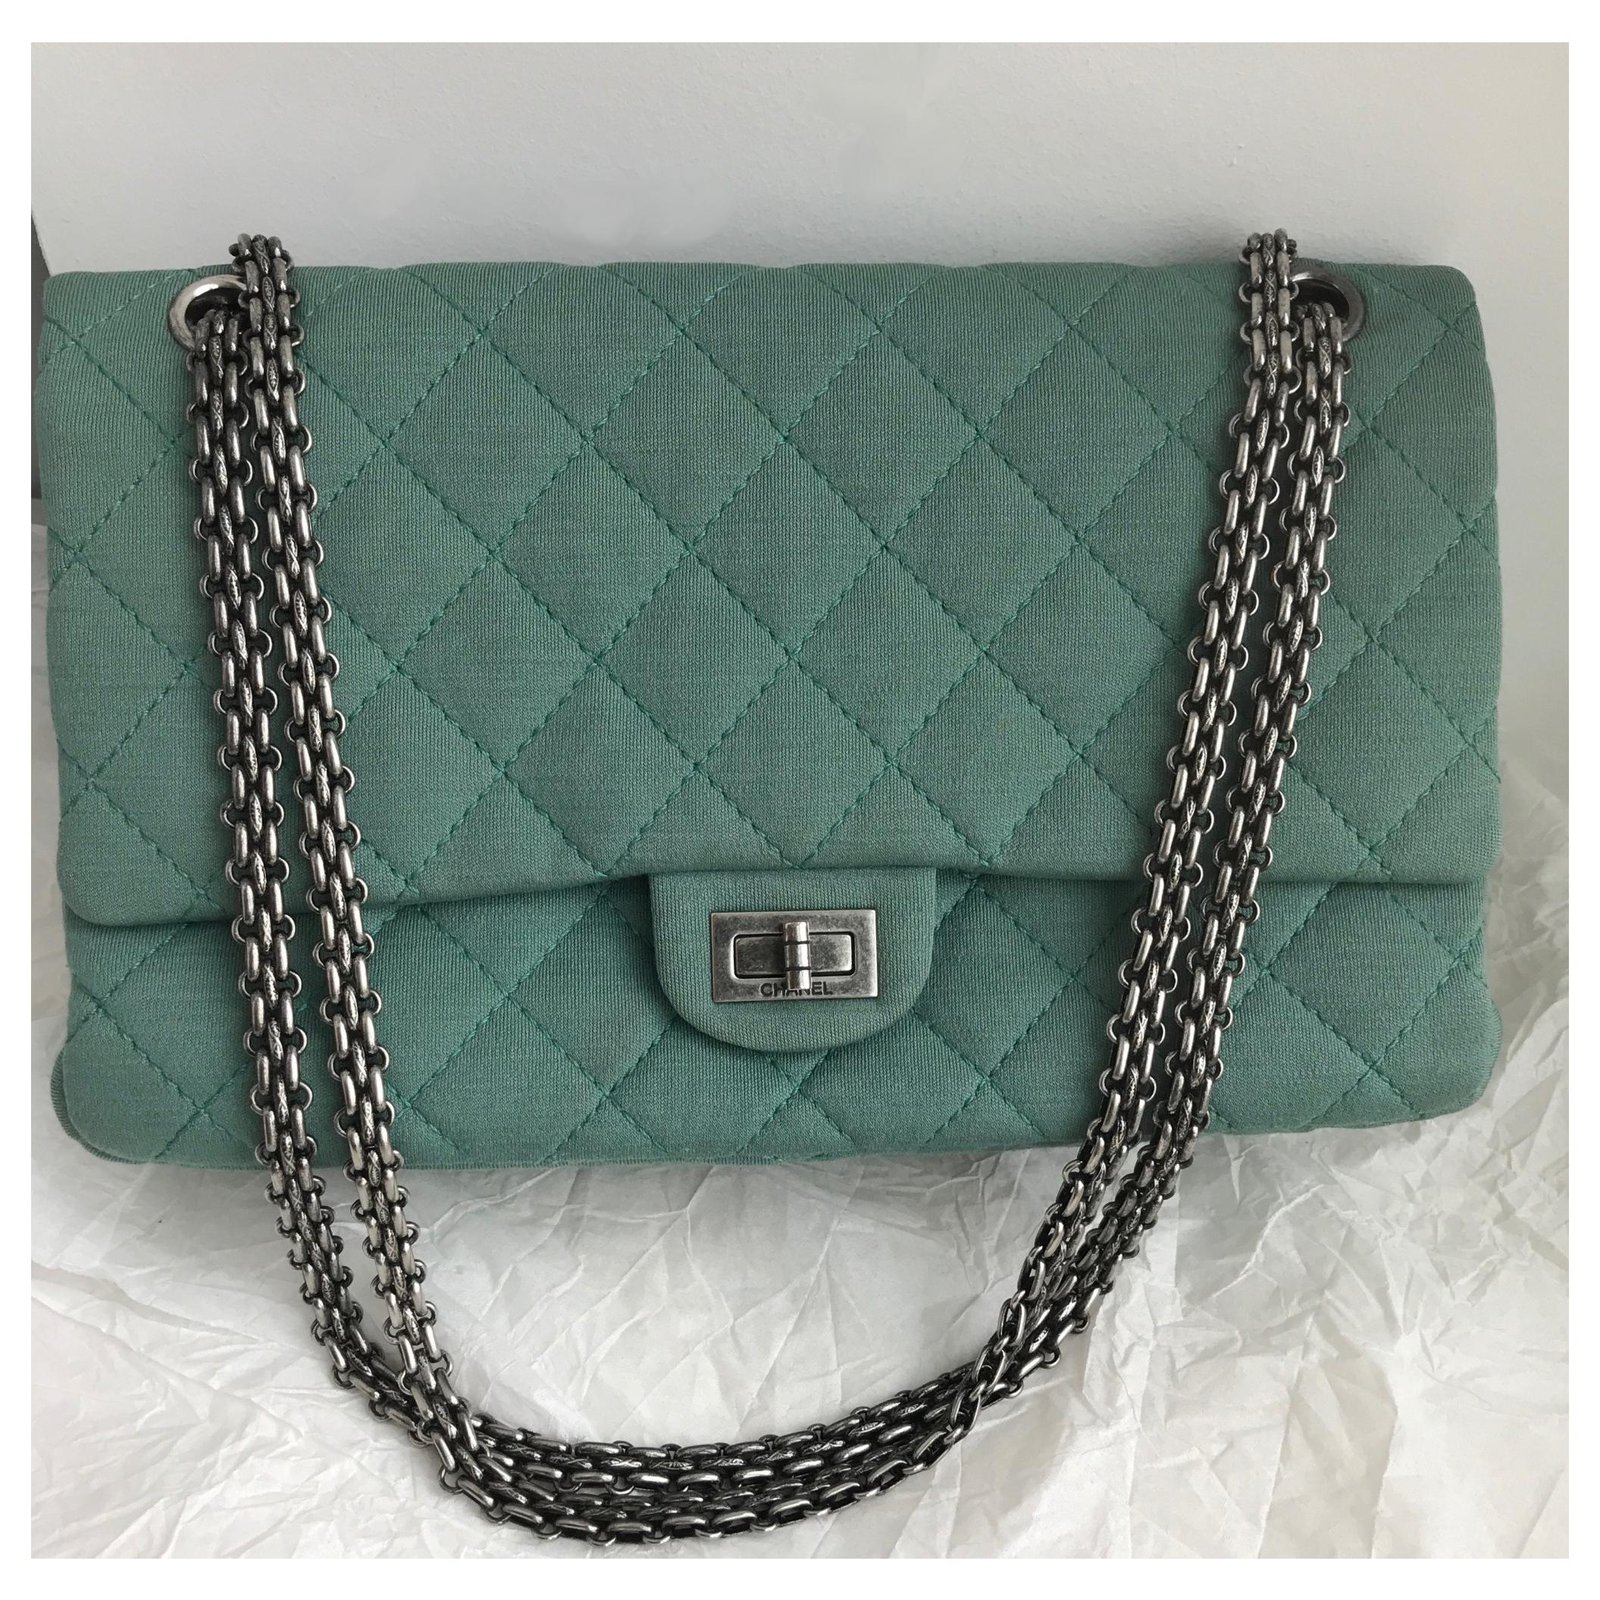 Chanel 2.55 Reissue 28 cm Large Flap Bag 226 Green Light green ...